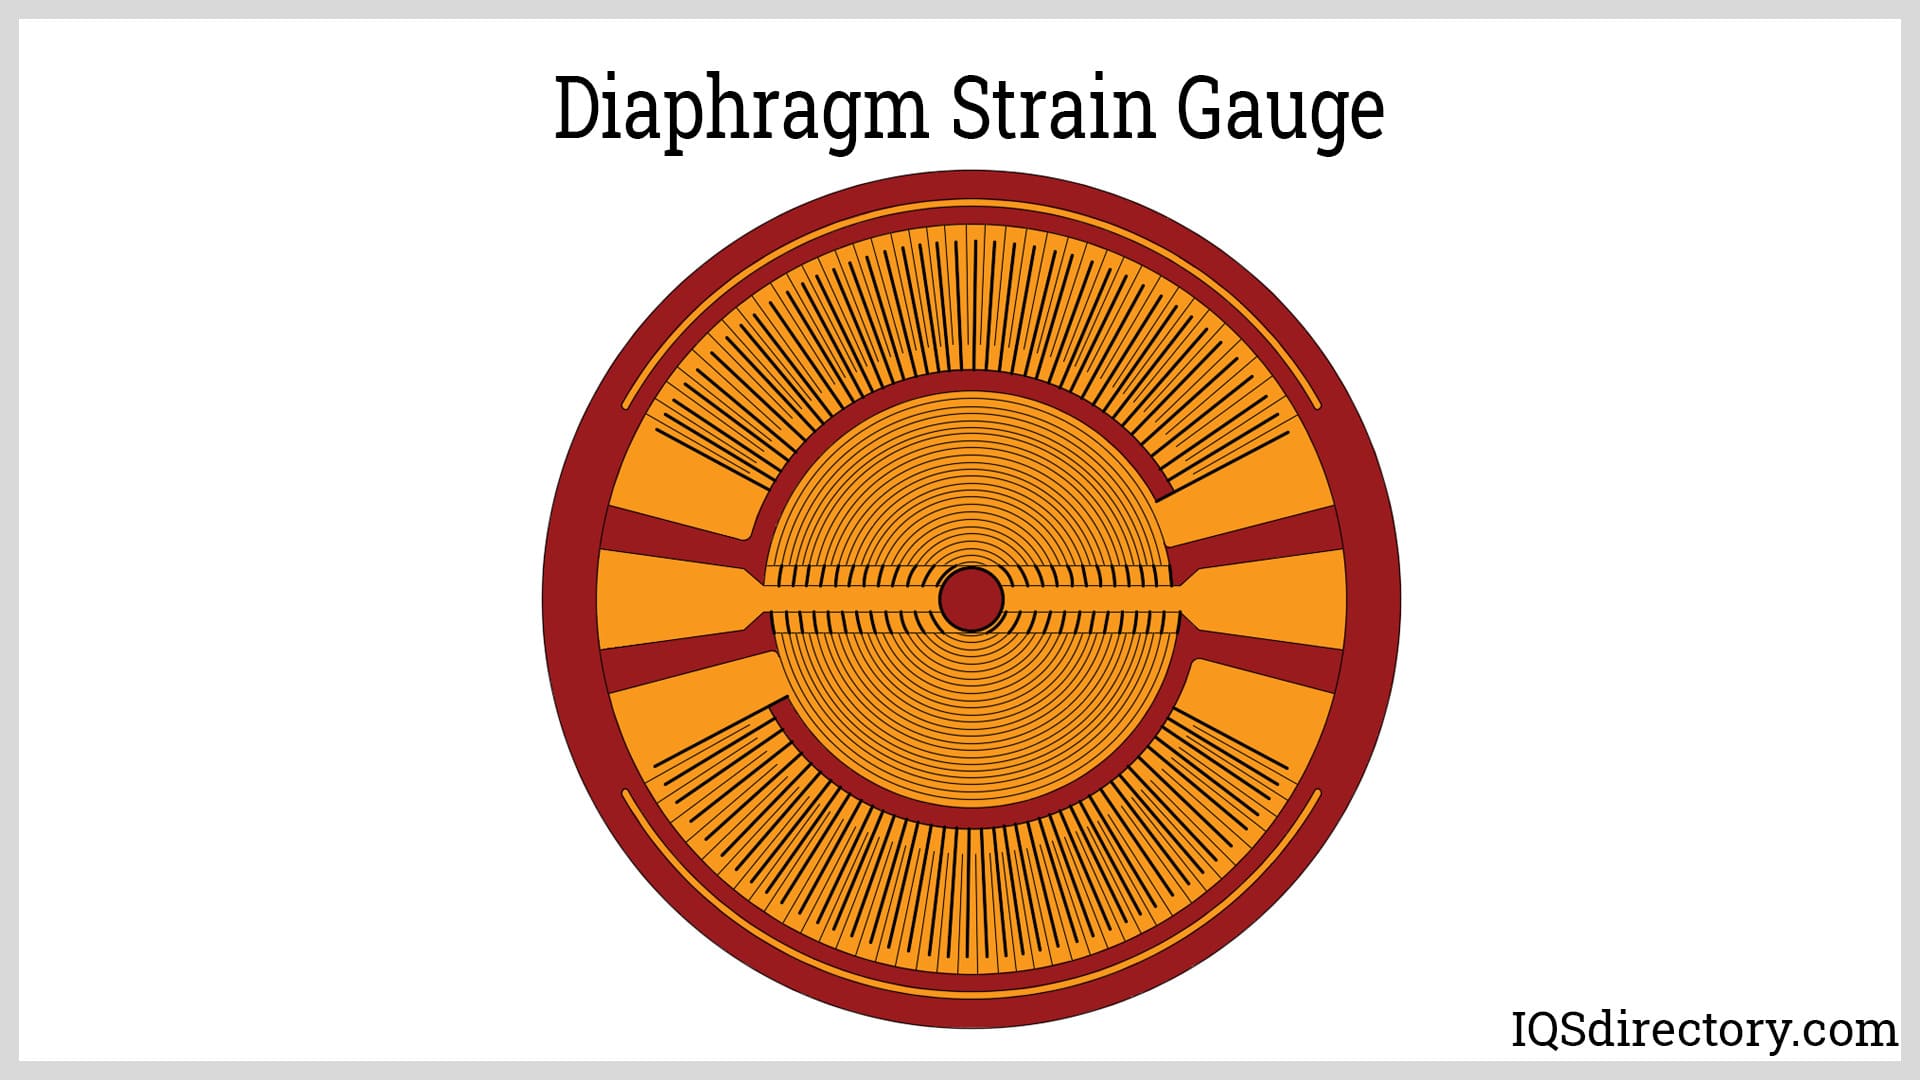 Diaphragm Strain Gauge